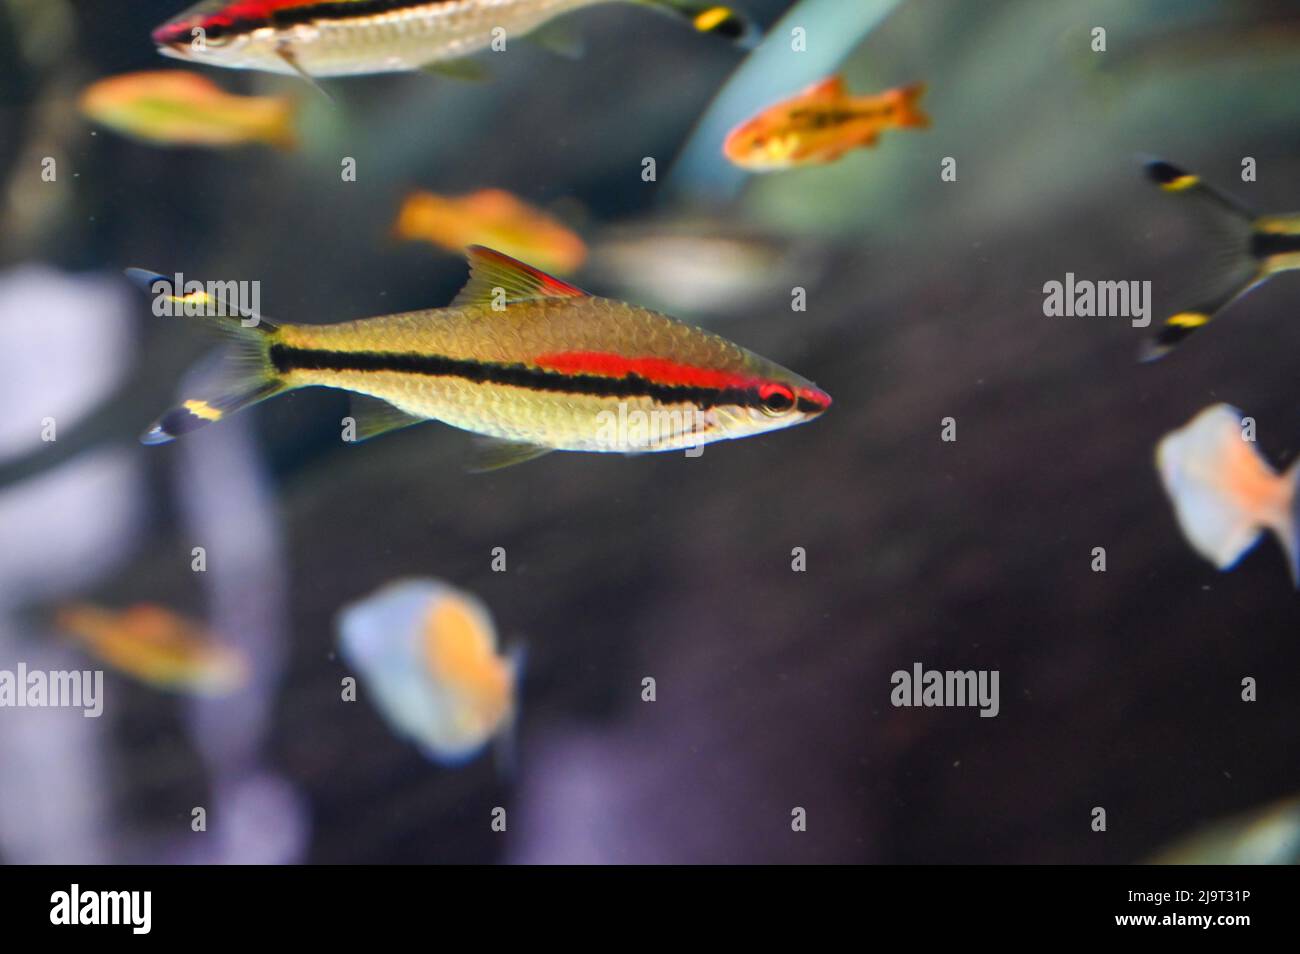 Small Fishes swimming in Aquarium Fish Tank Stock Photo